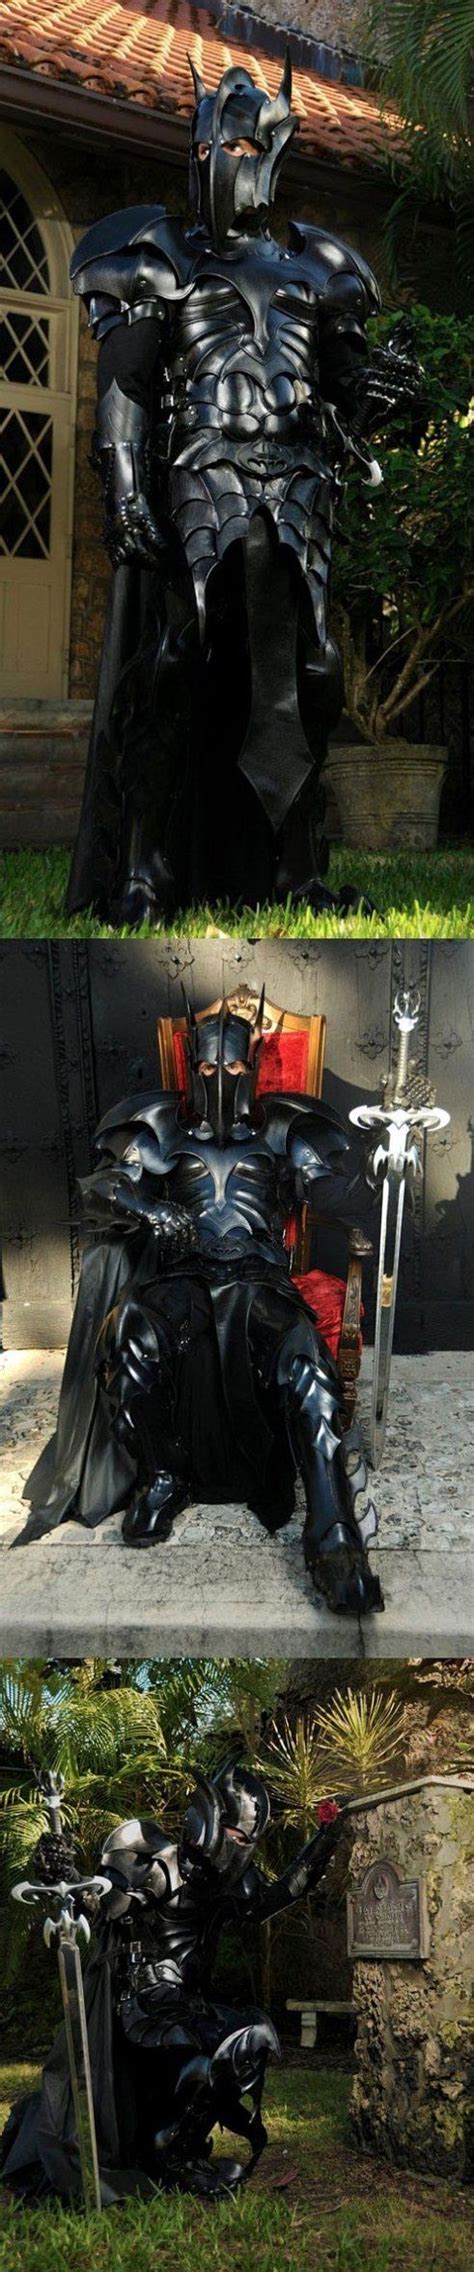 Medieval Batman Armor Batman Armor Fantasy Armor Armor